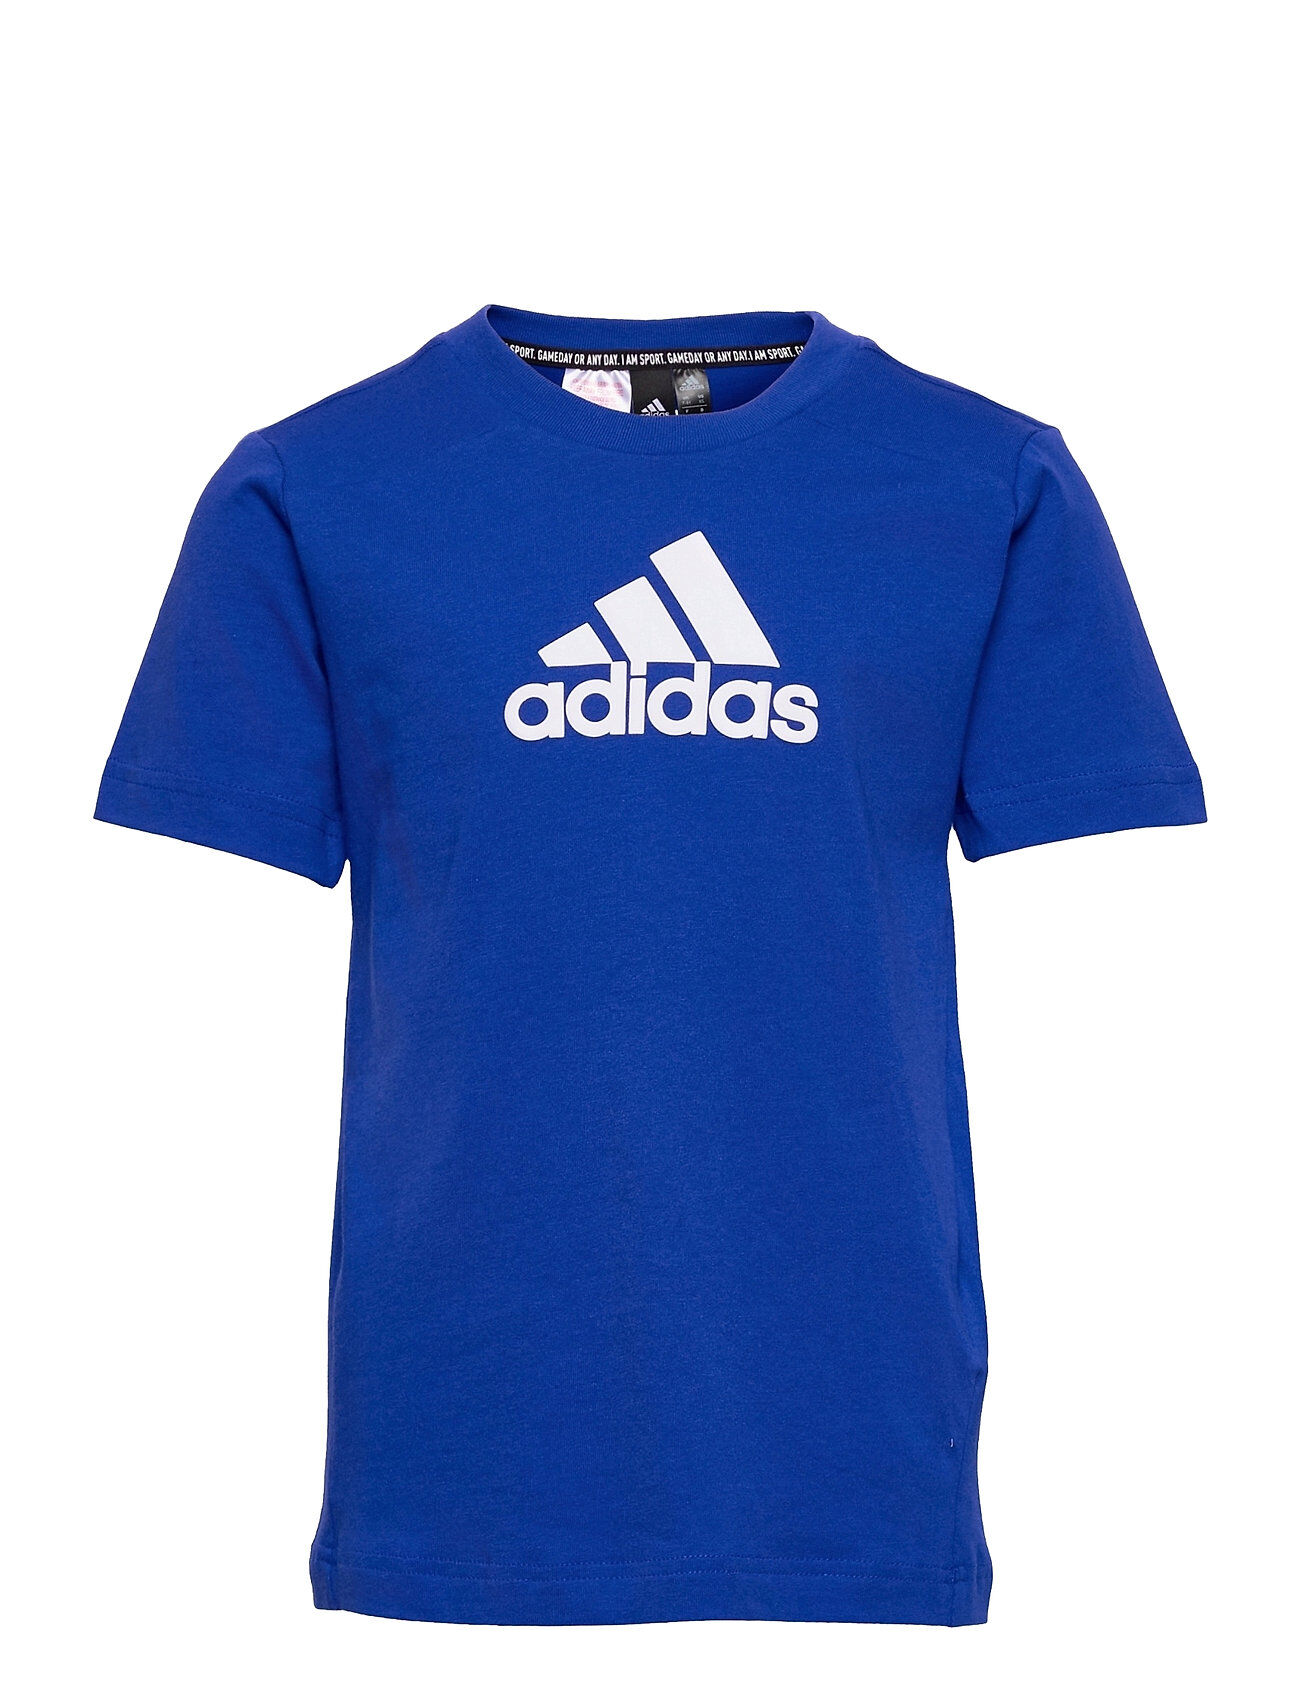 adidas Performance Logo Tee T-shirts Short-sleeved Blå Adidas Performance